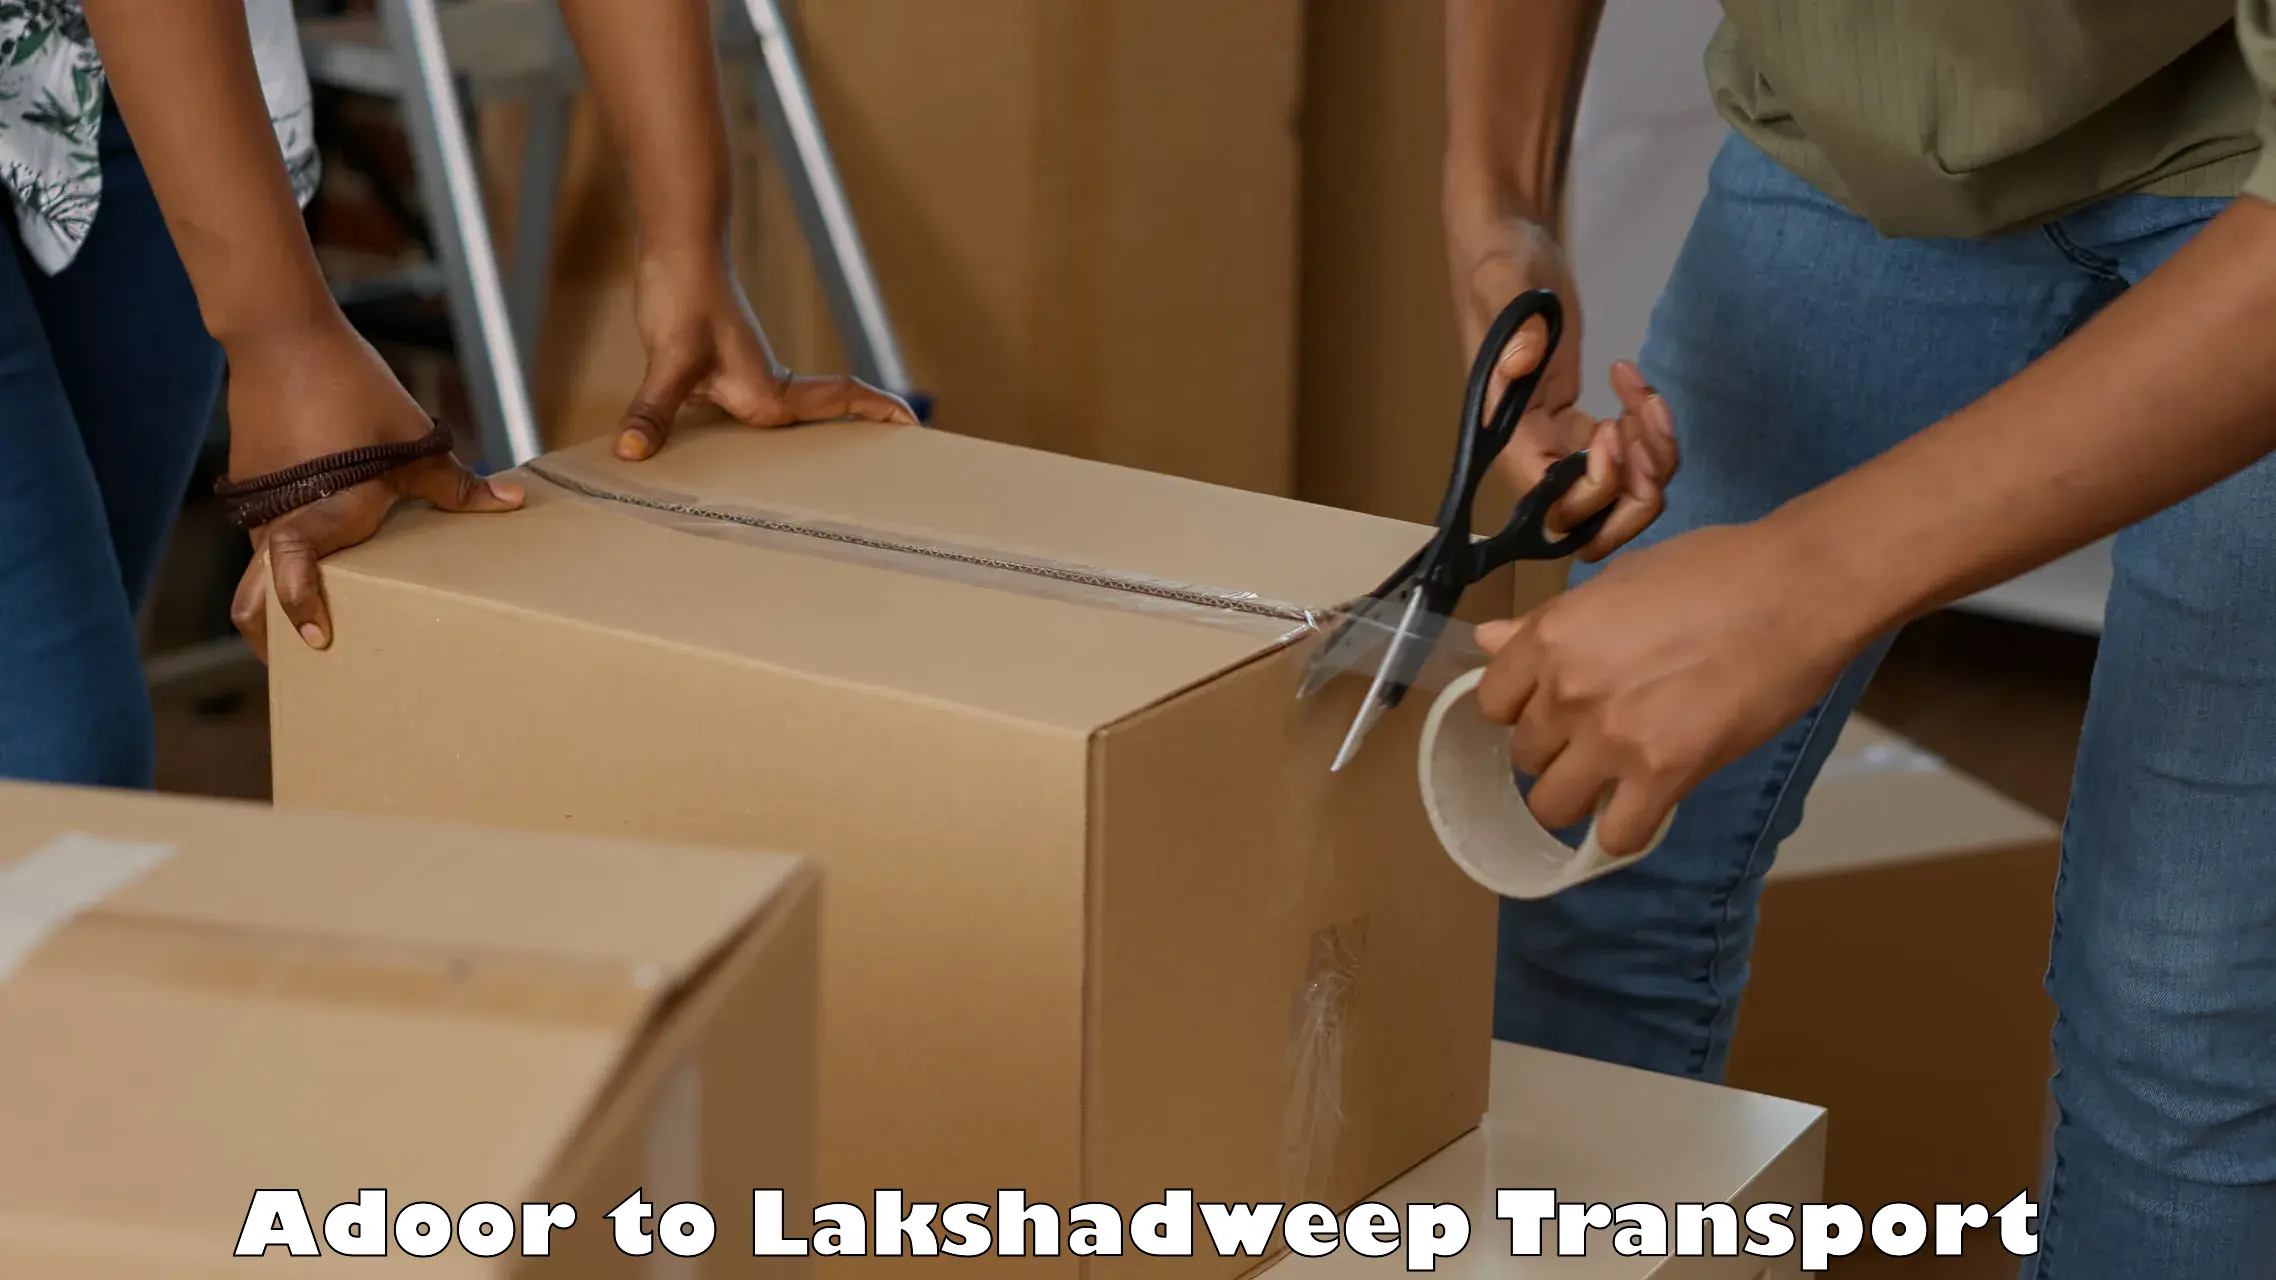 Truck transport companies in India Adoor to Lakshadweep